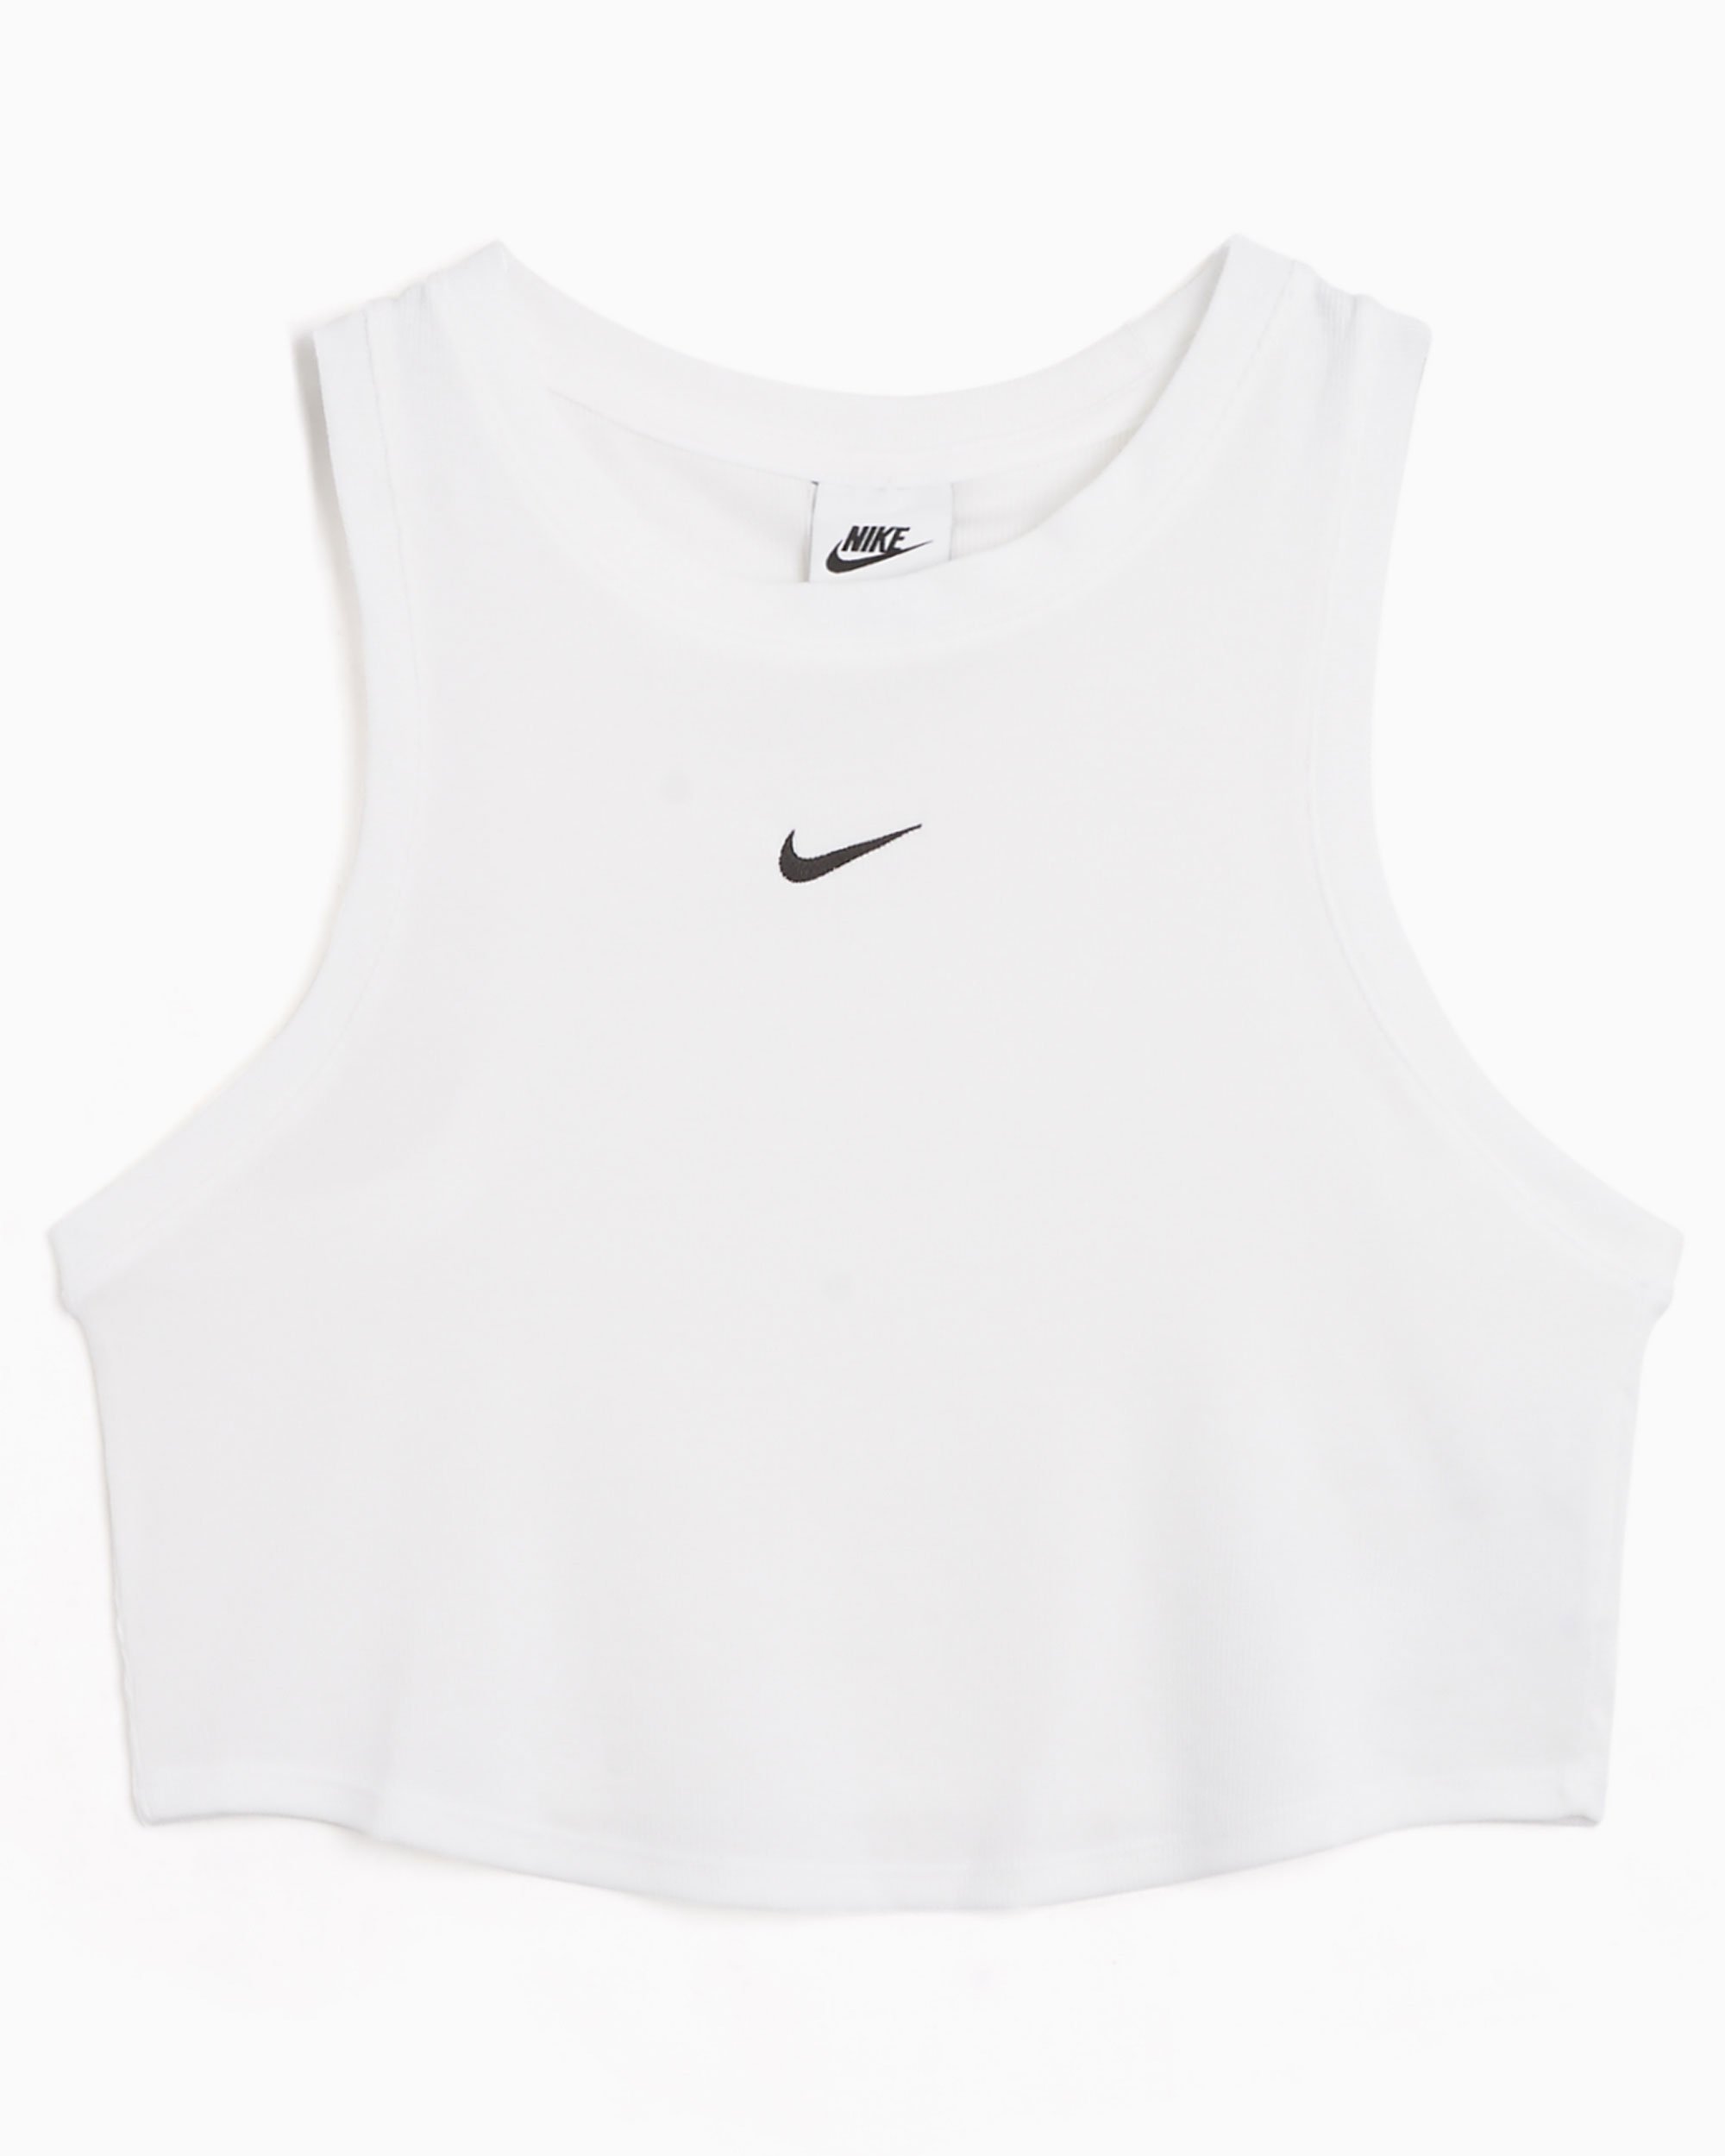  Nike Women Shirts And Tops